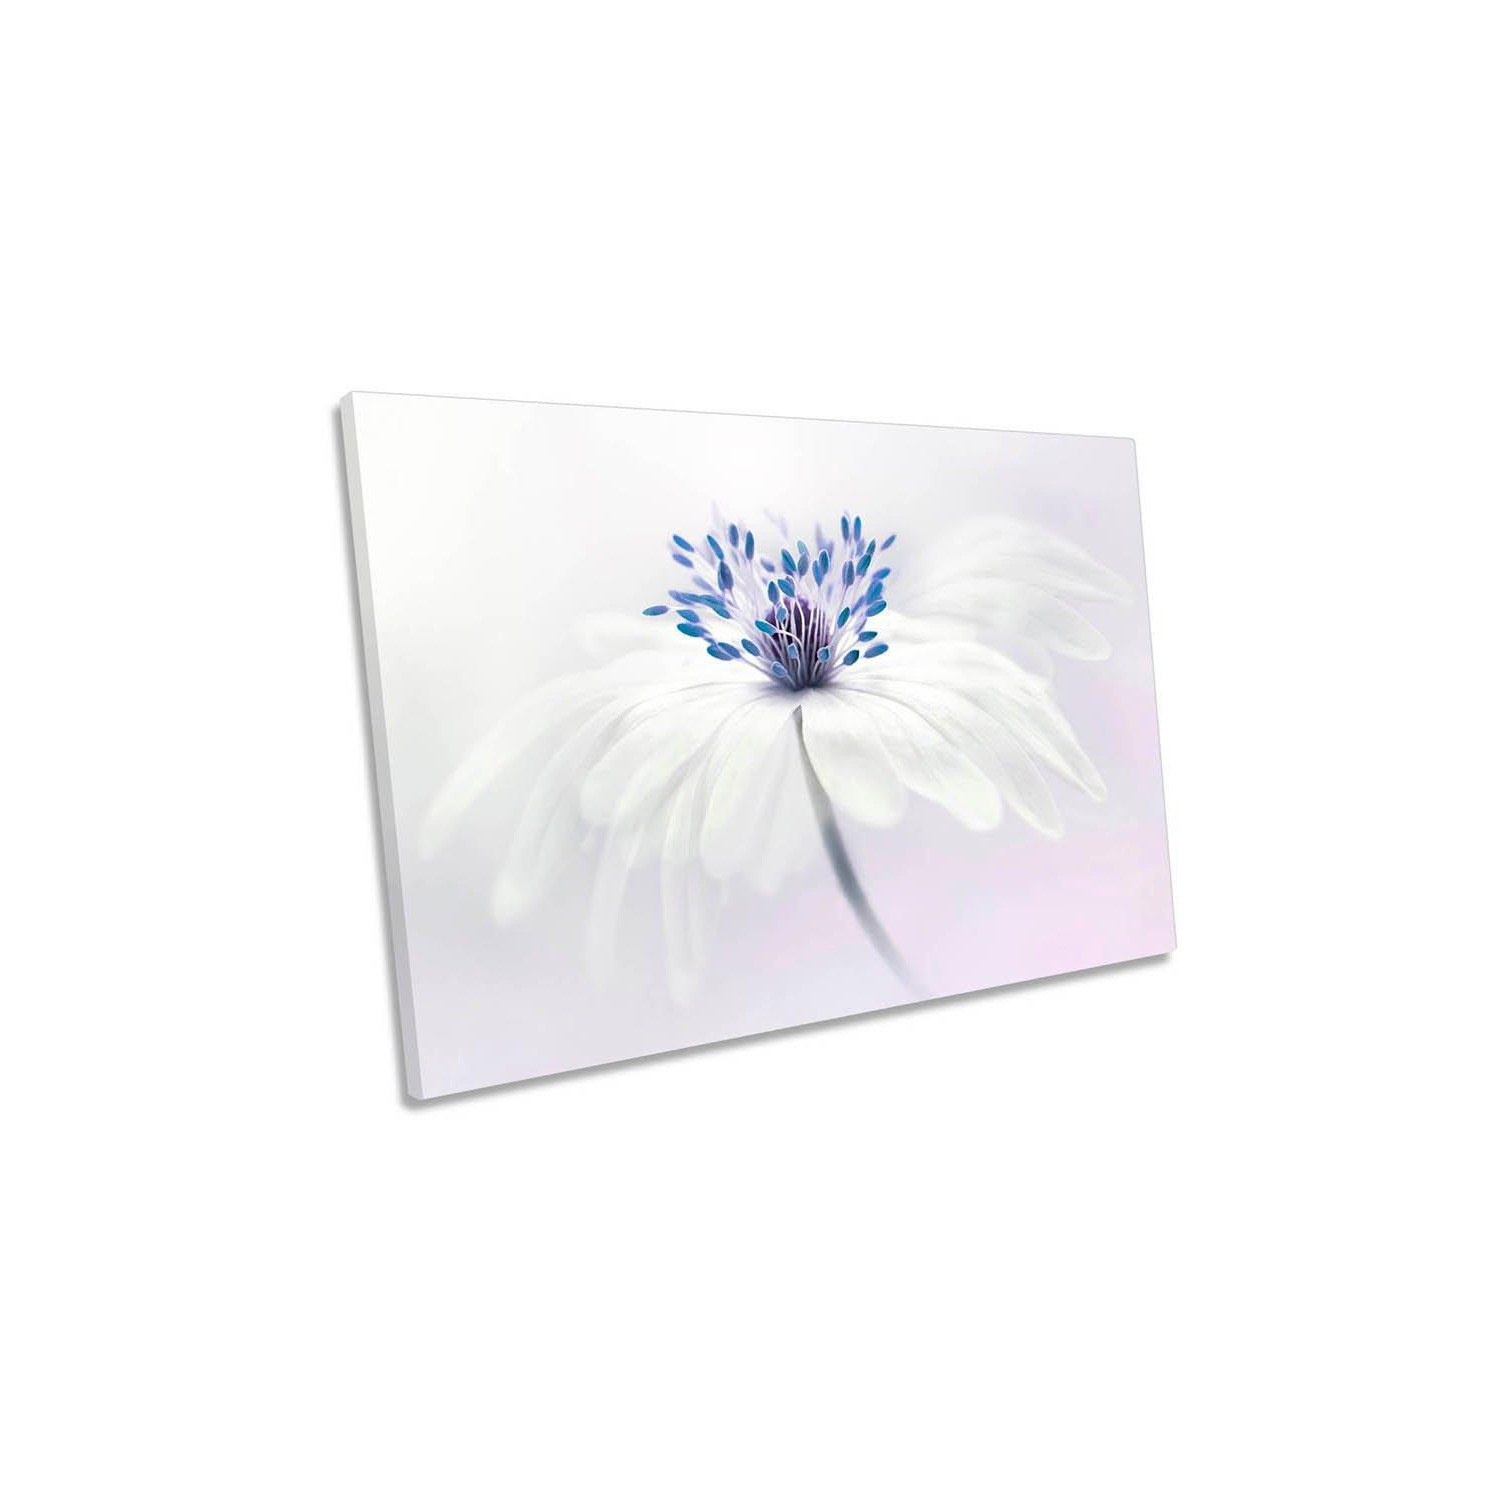 Anemone Blanda Soft Flower White Canvas Wall Art Picture Print - image 1